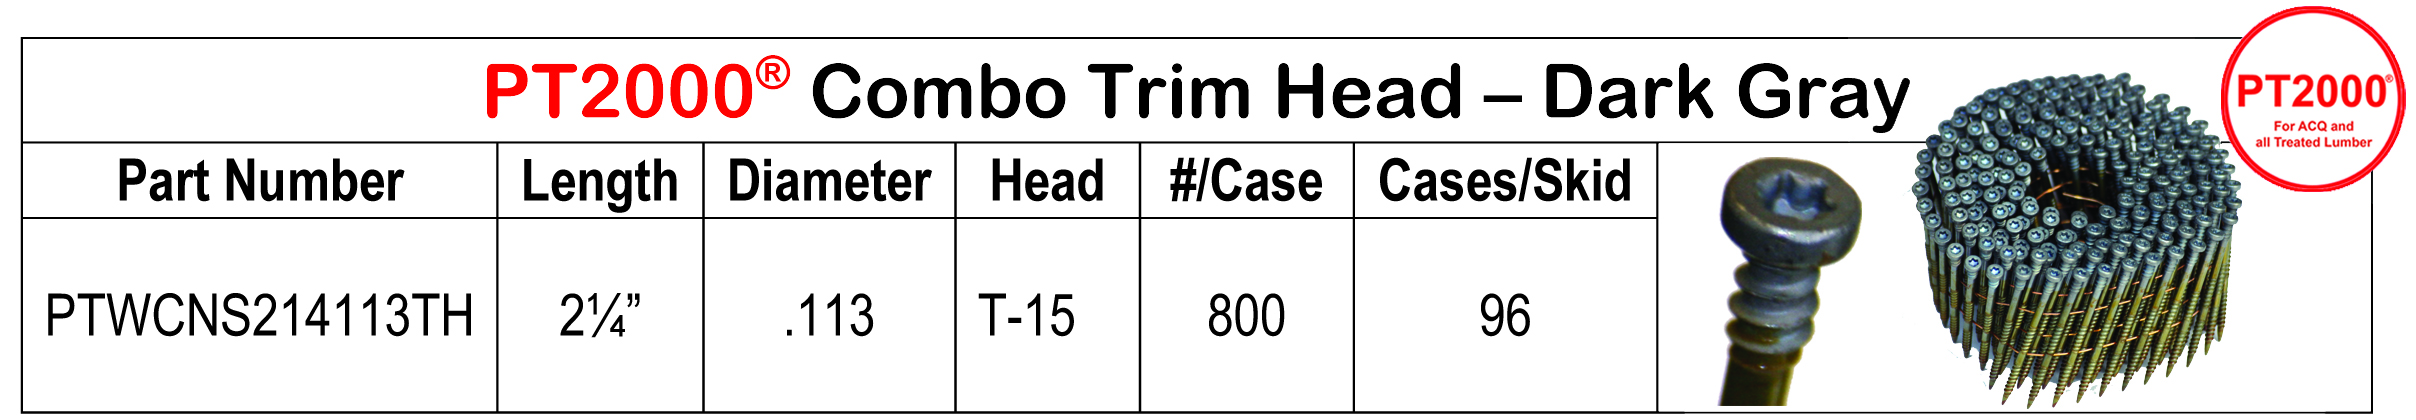 PT2000 Combo Trim Head